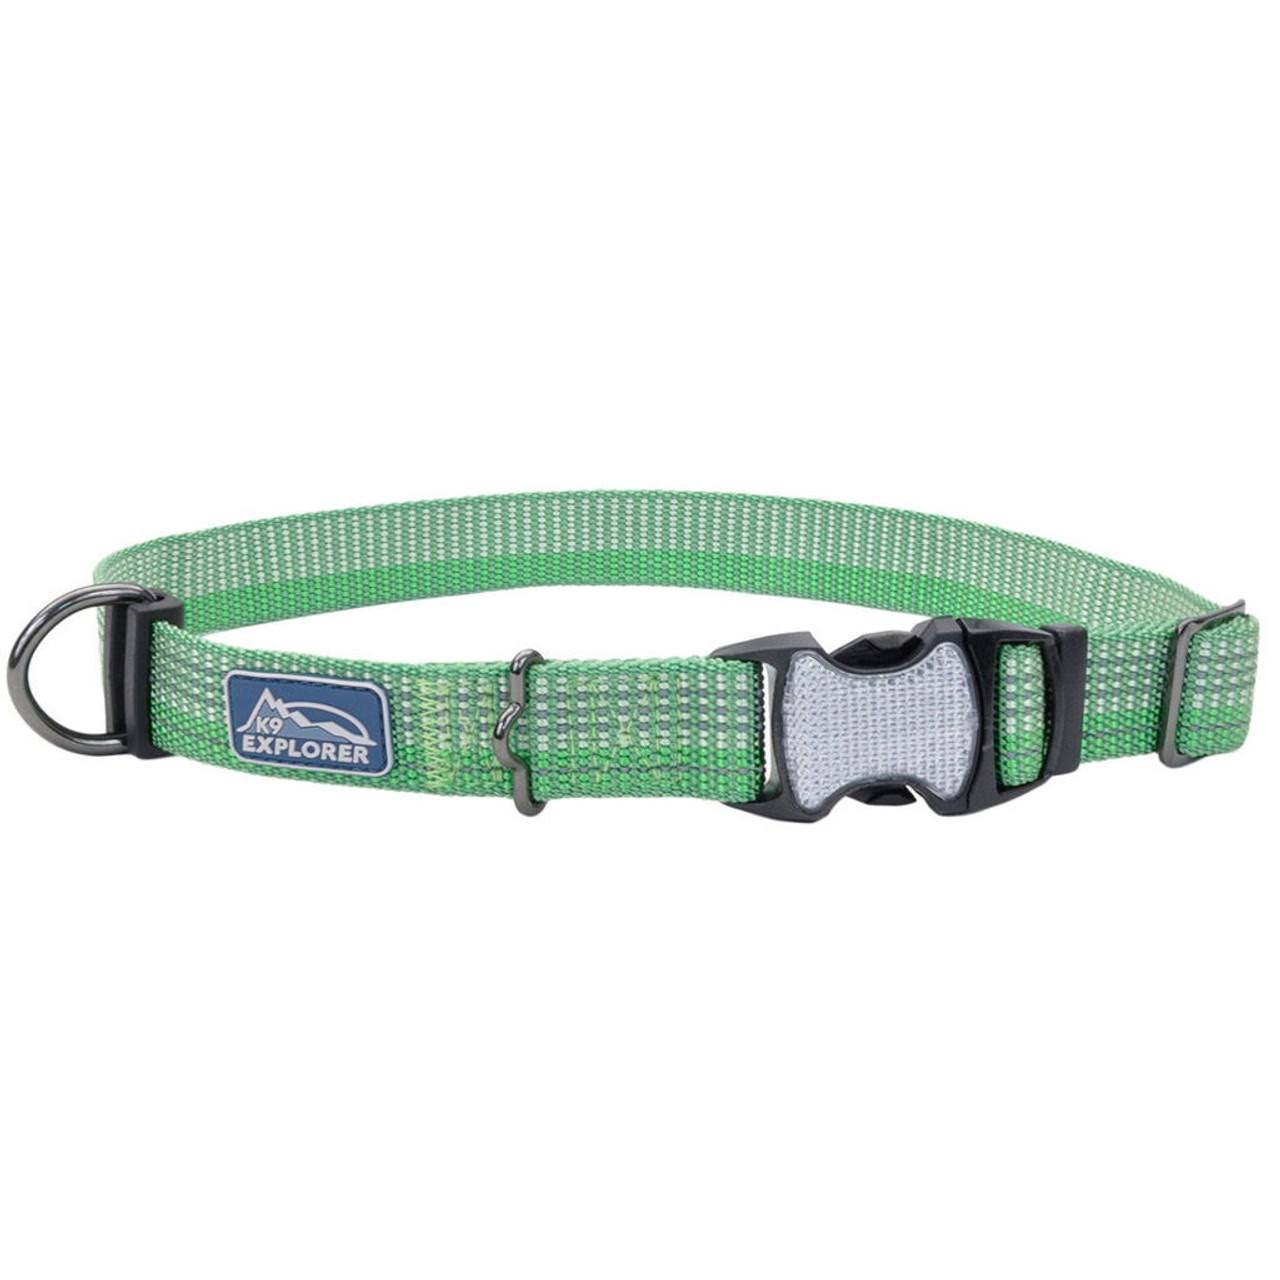 Coastal K9 Explorer Brights Reflective Dog Collar Meadow / 1" x 12-18"